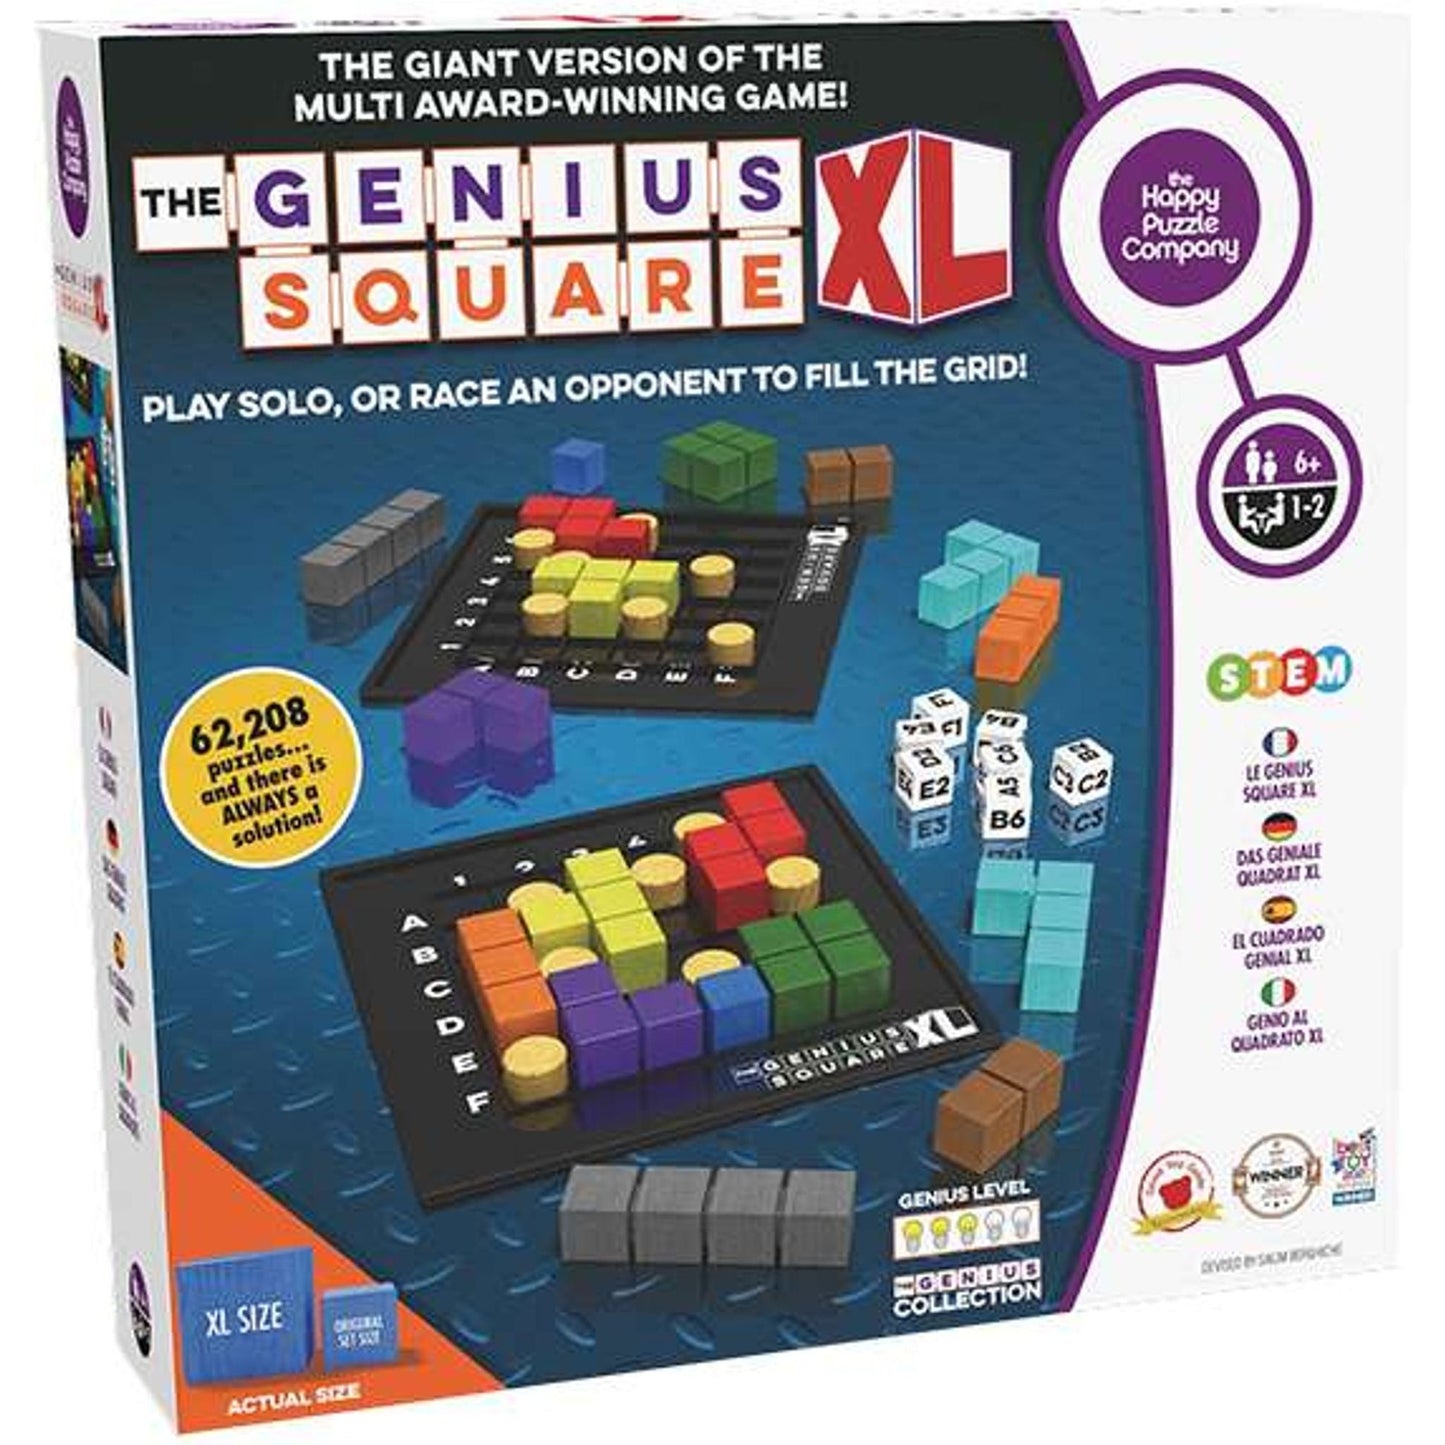 The Genius Square XL - Toybox Tales